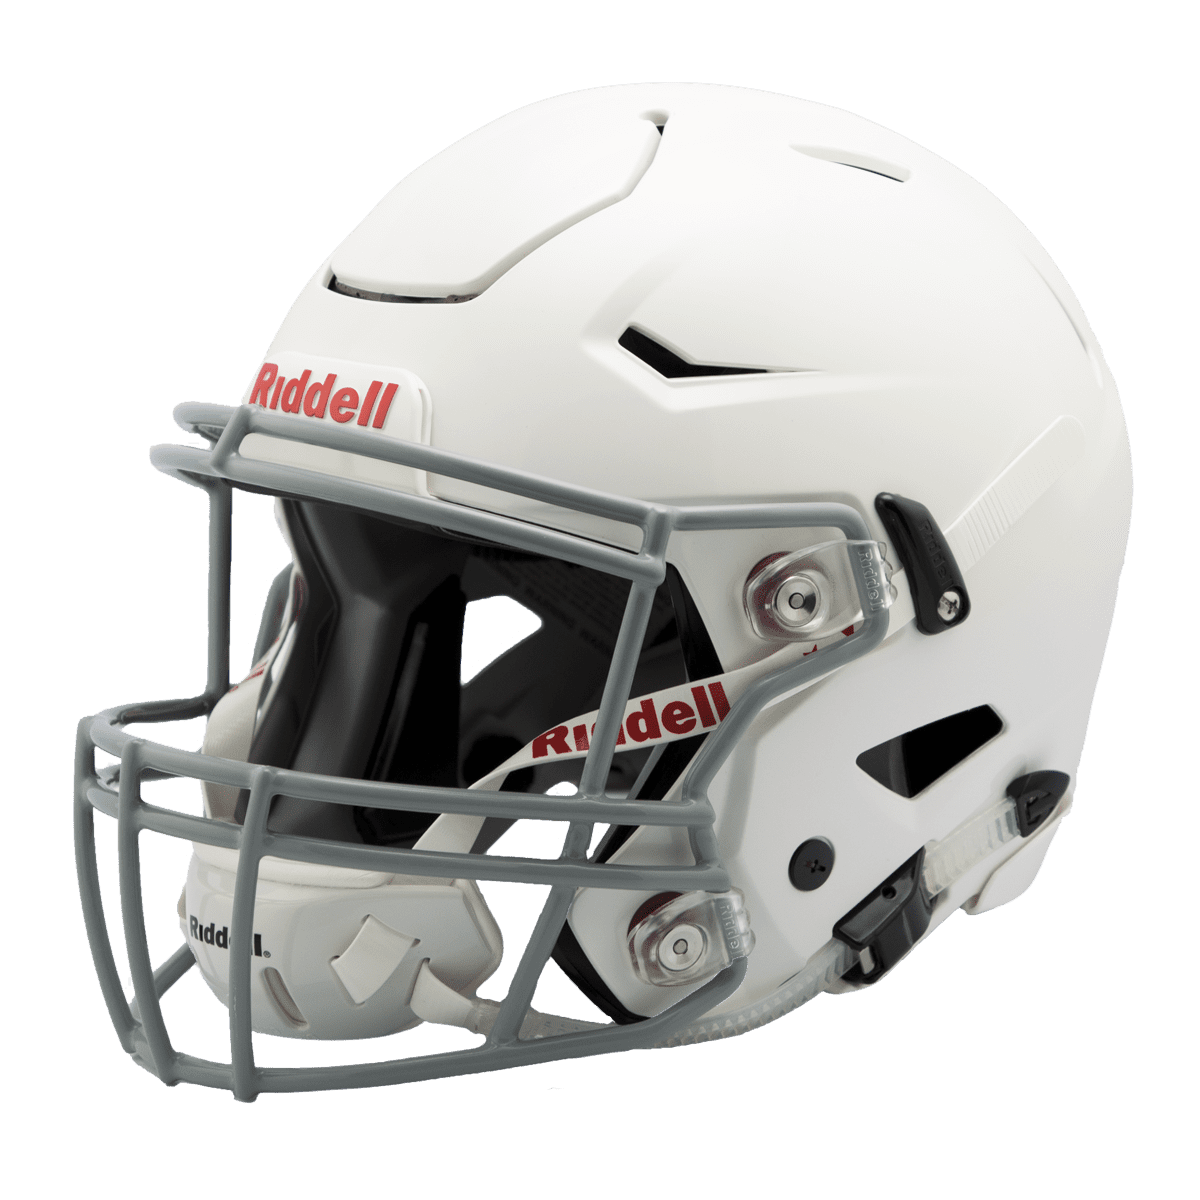 Details about   Madison Air Flo Football Medium 56cm Headgear in White 